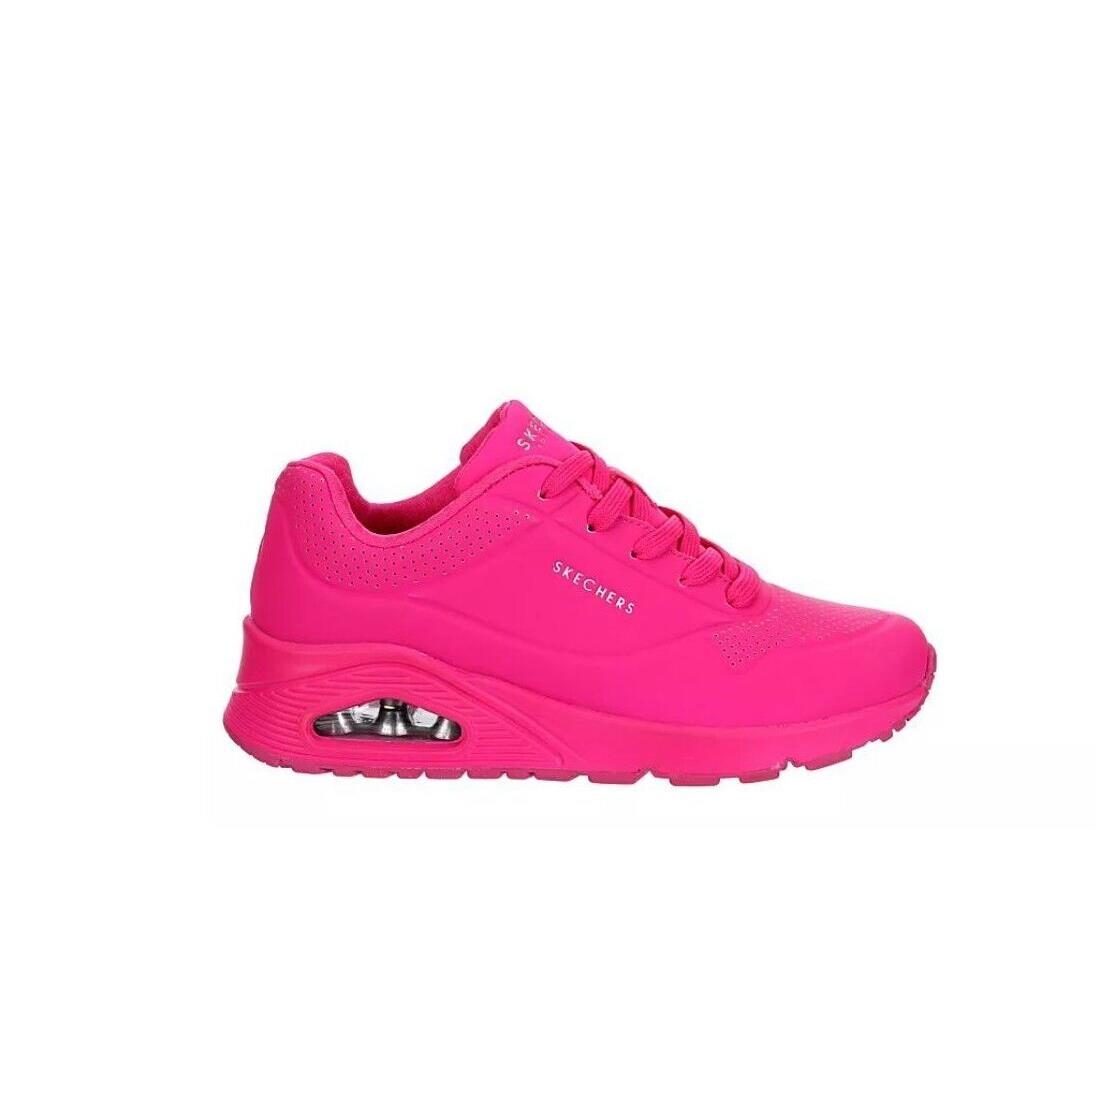 Skechers Air Uno Pop of Sunshine Low Top Women`s Casual Fashion Shoes Sneaker Hot Pink